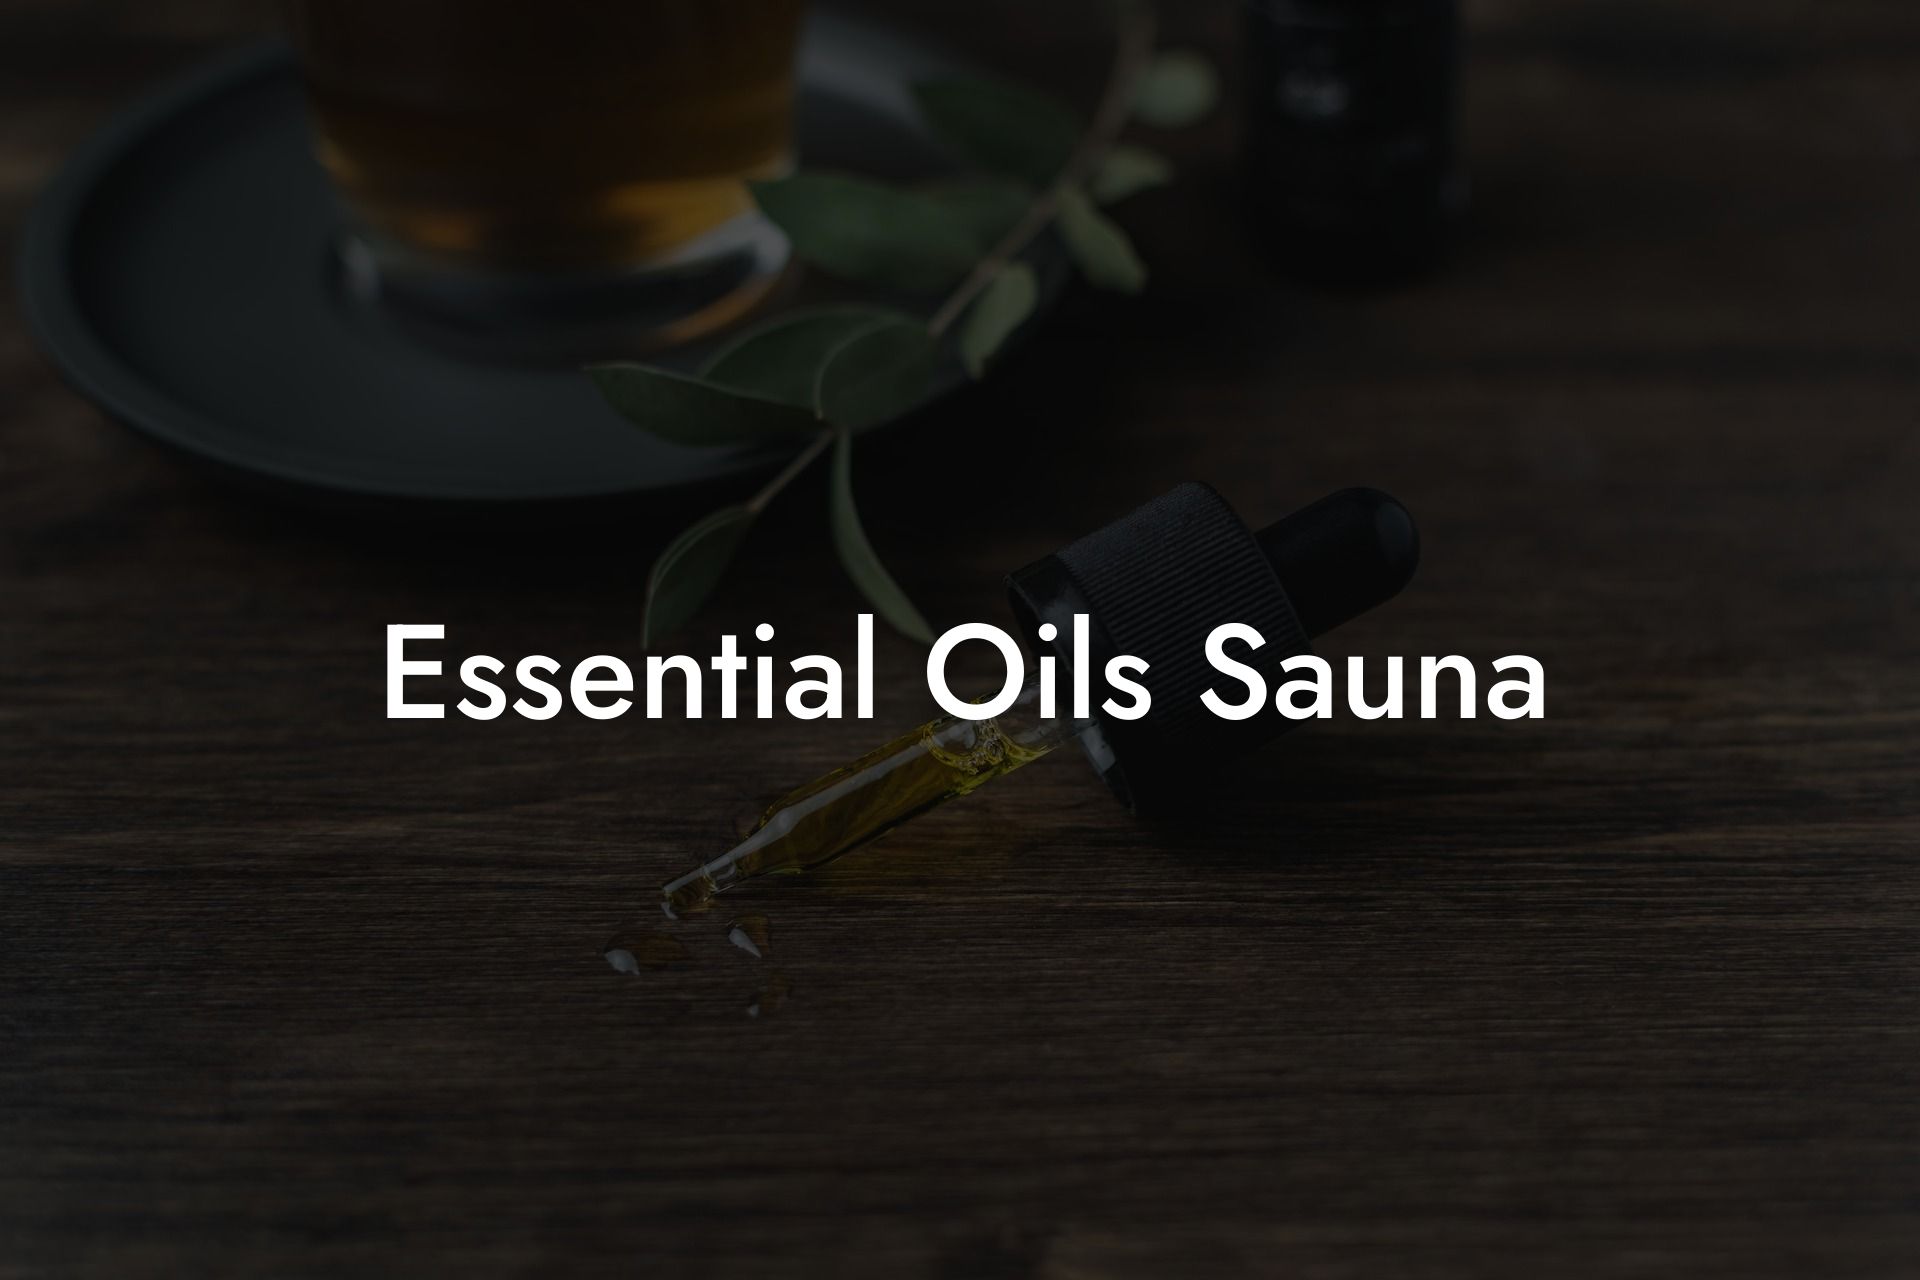 Essential Oils Sauna